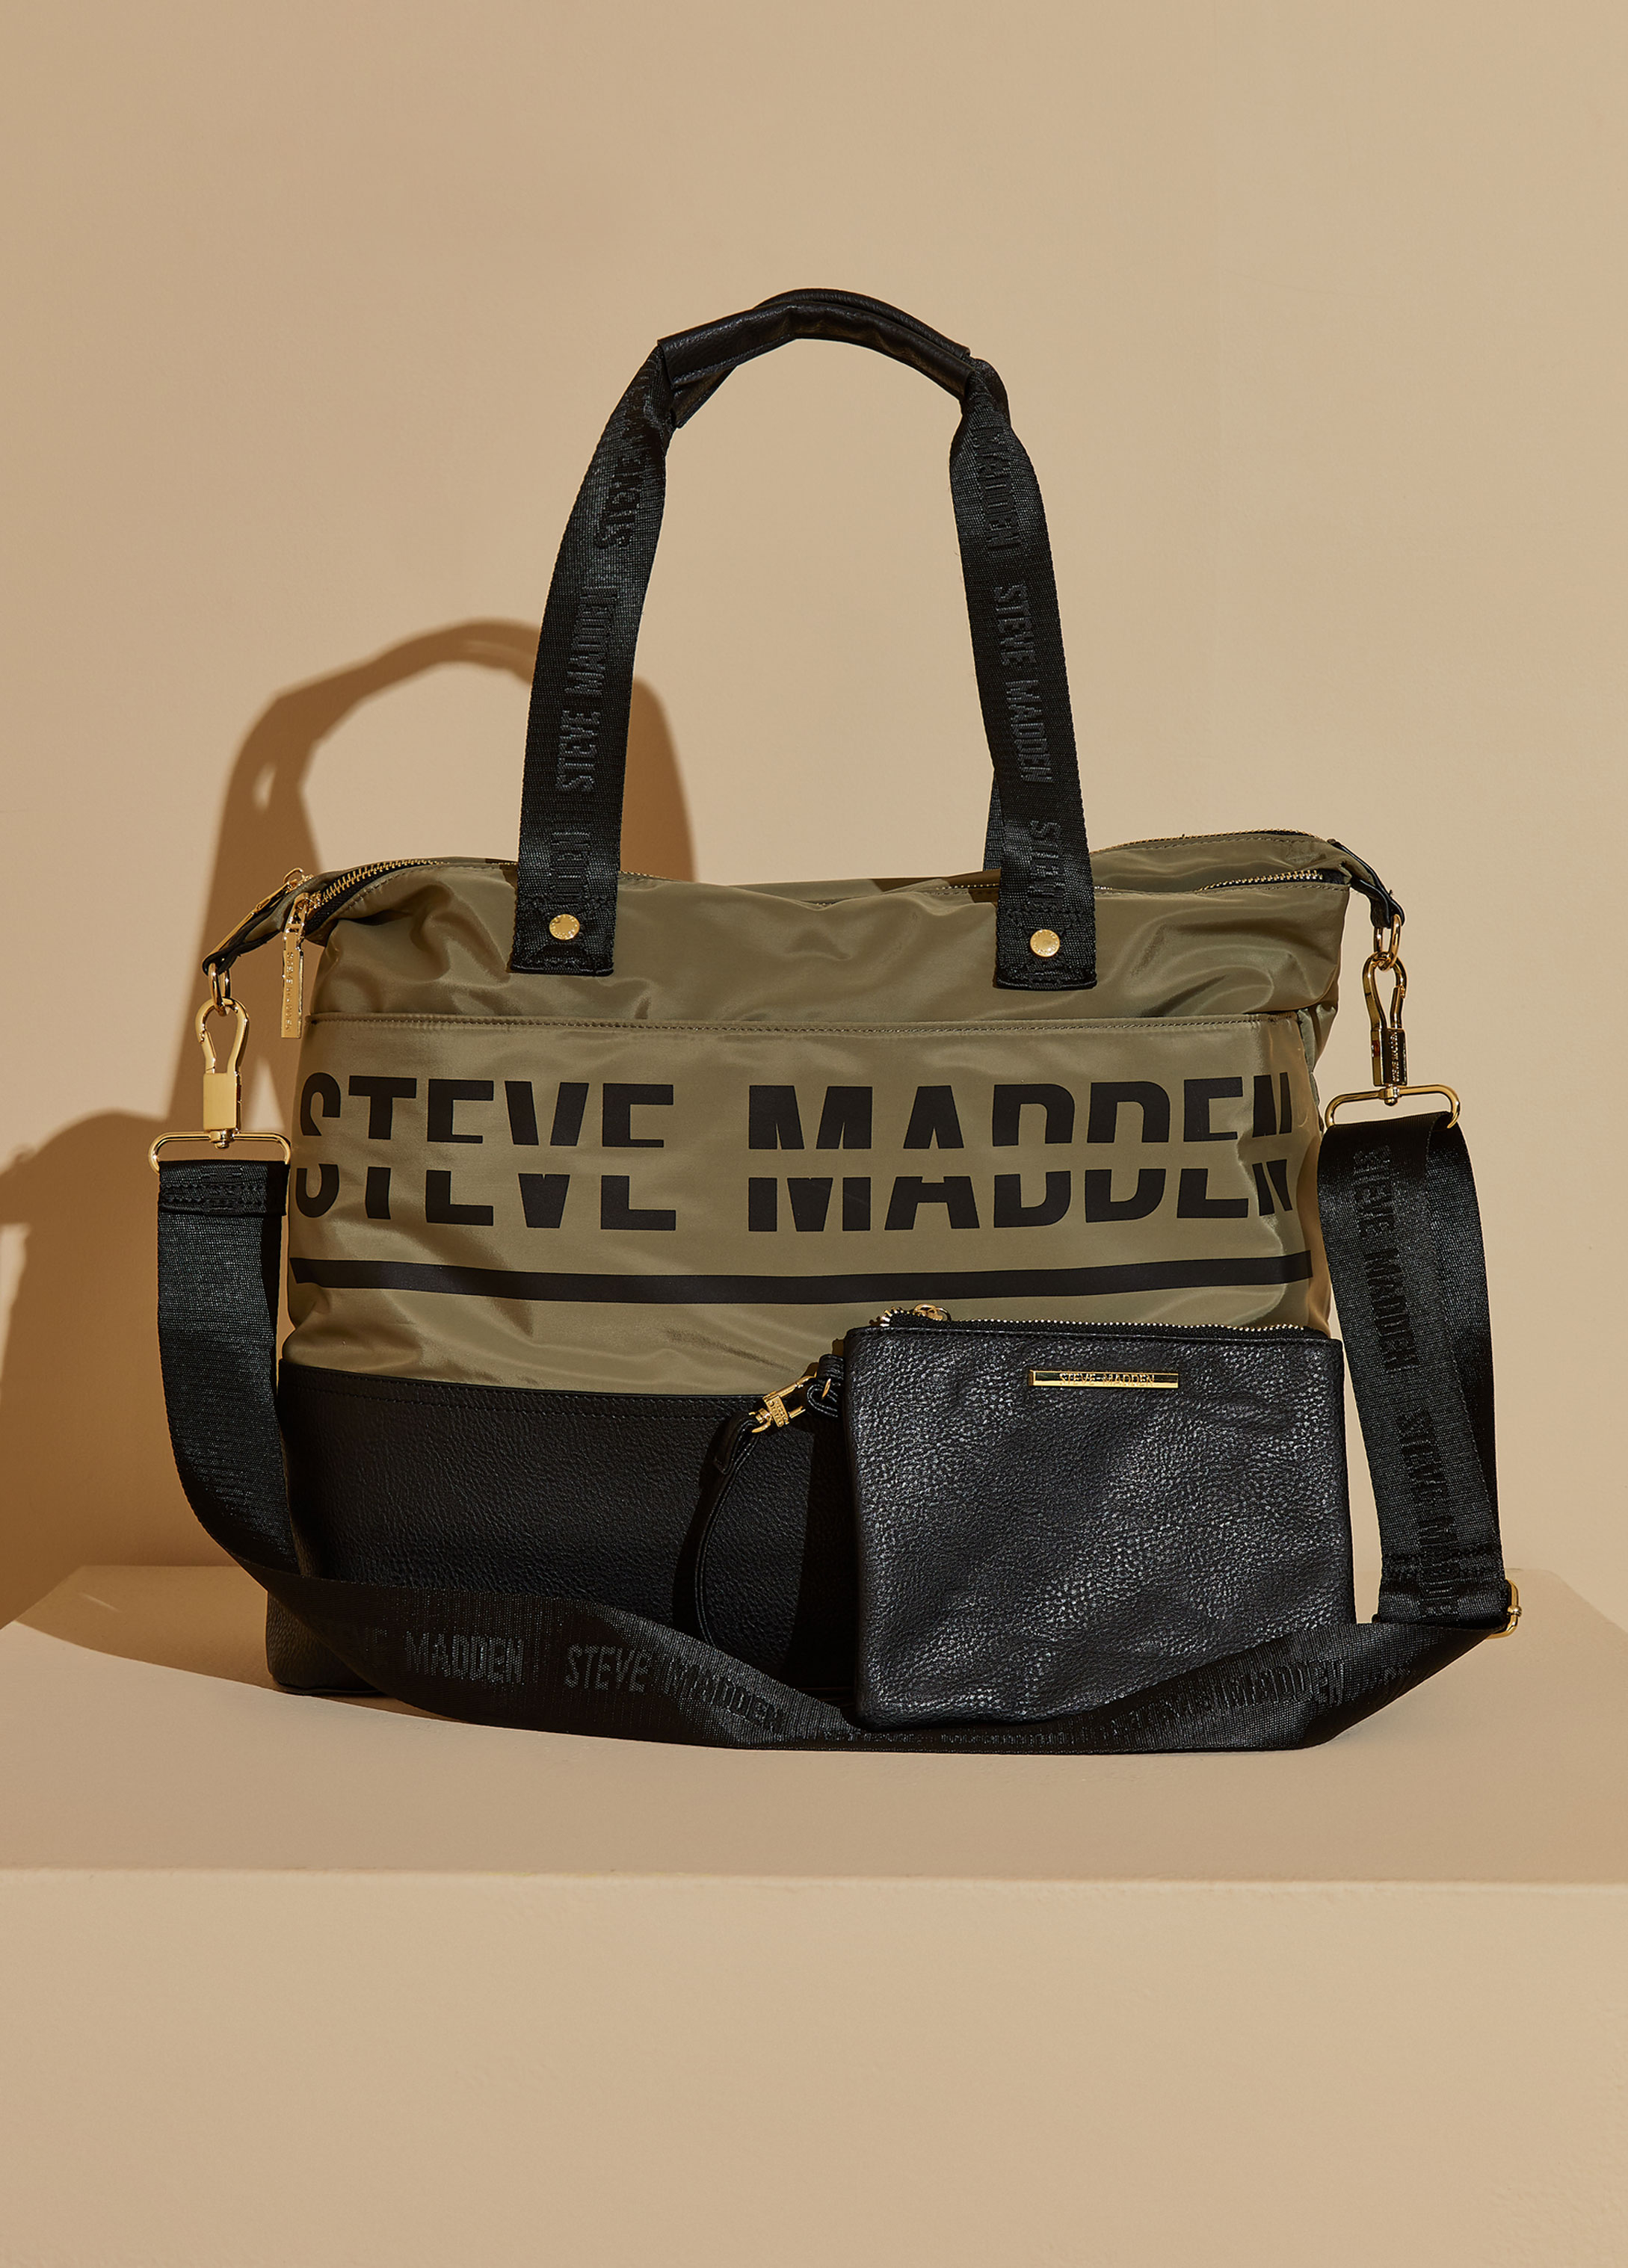 Steve Madden, Bags, Large Black Steve Madden Tote Bag W Gold Chains